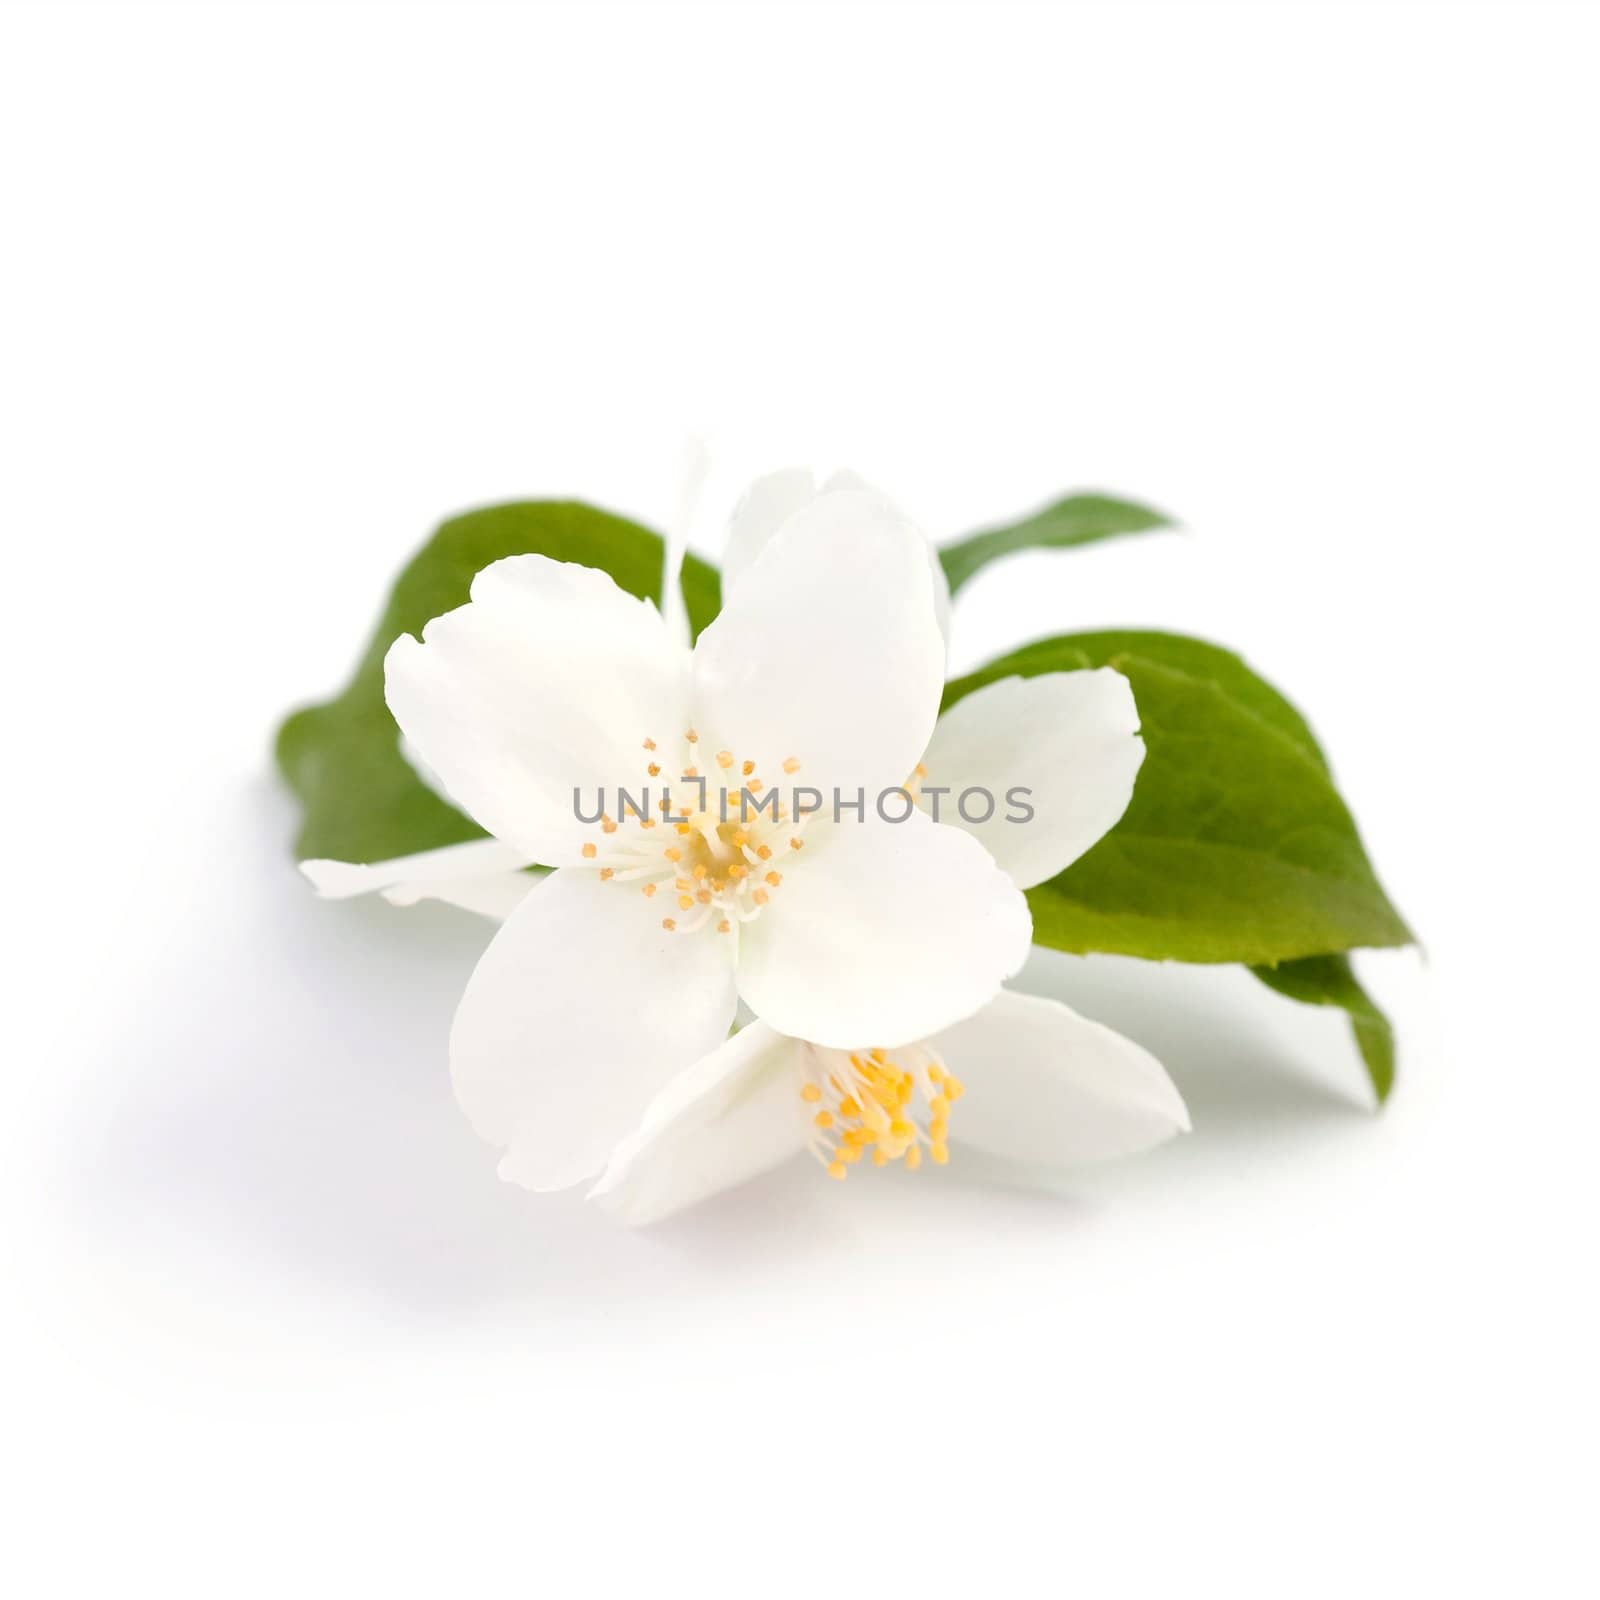 An image of beautiful flowers of jasmine